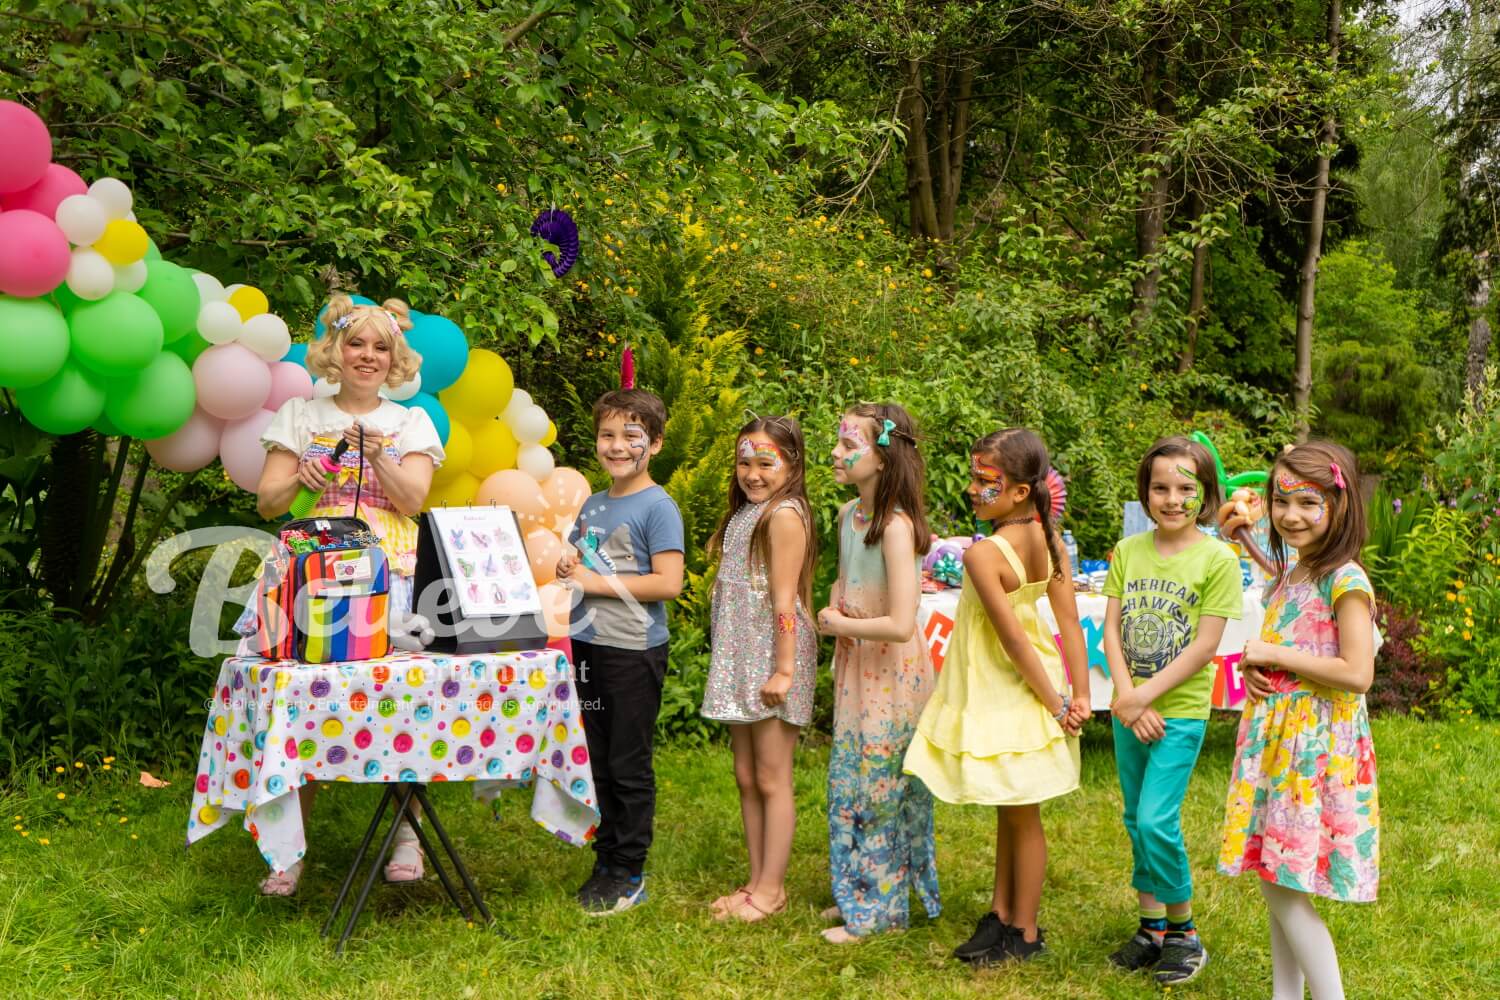 Kids Party Entertainment Ideas Balloon Twister